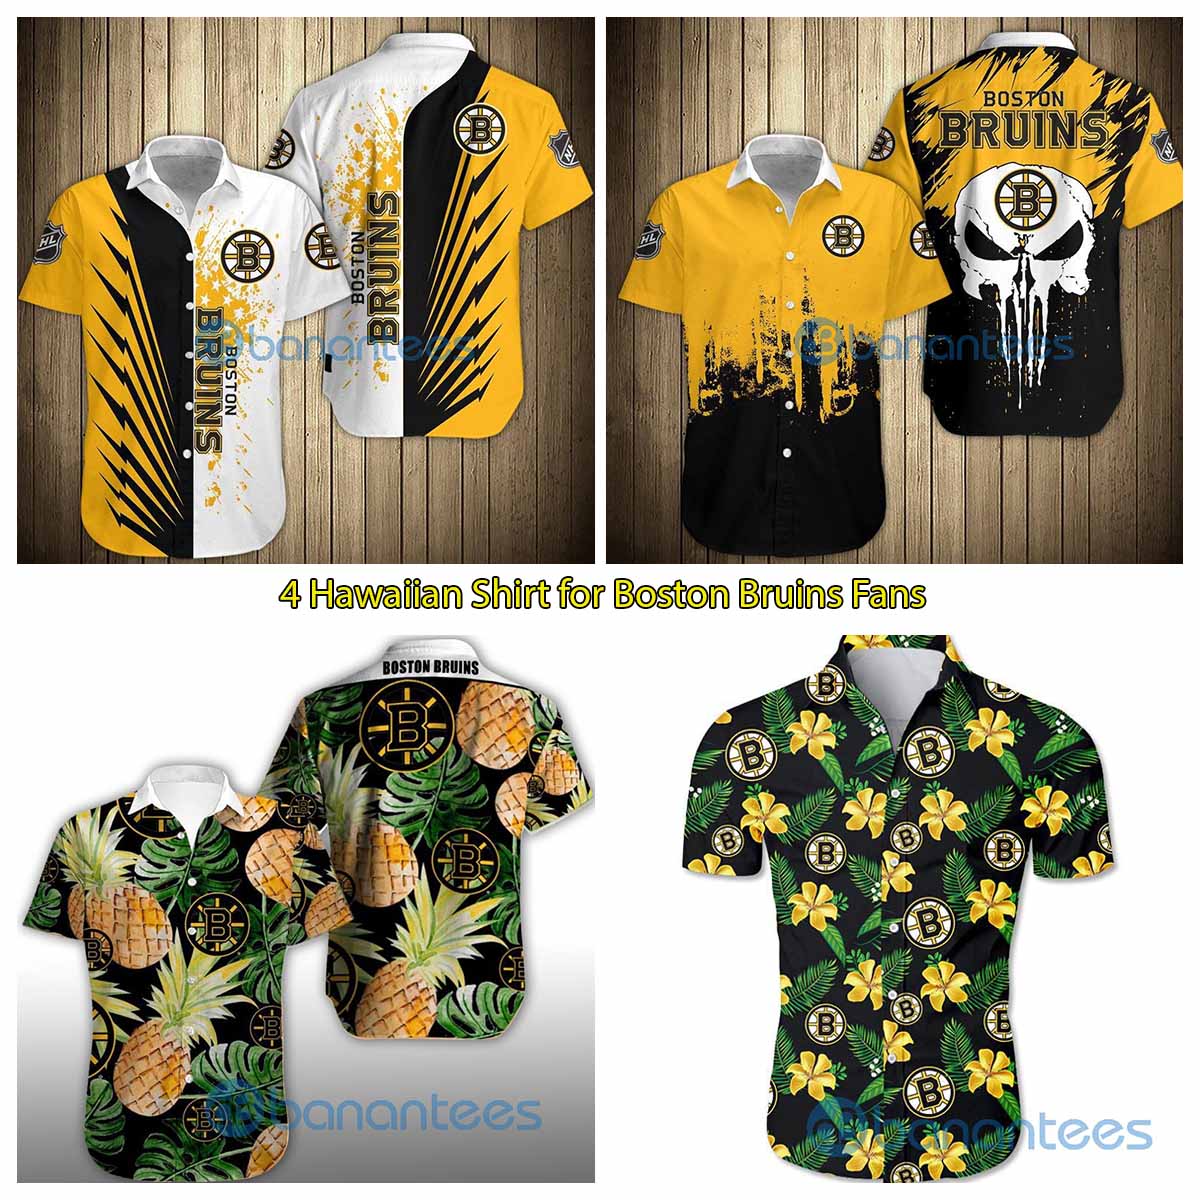 4 Hawaiian Shirt for Boston Bruins Fans